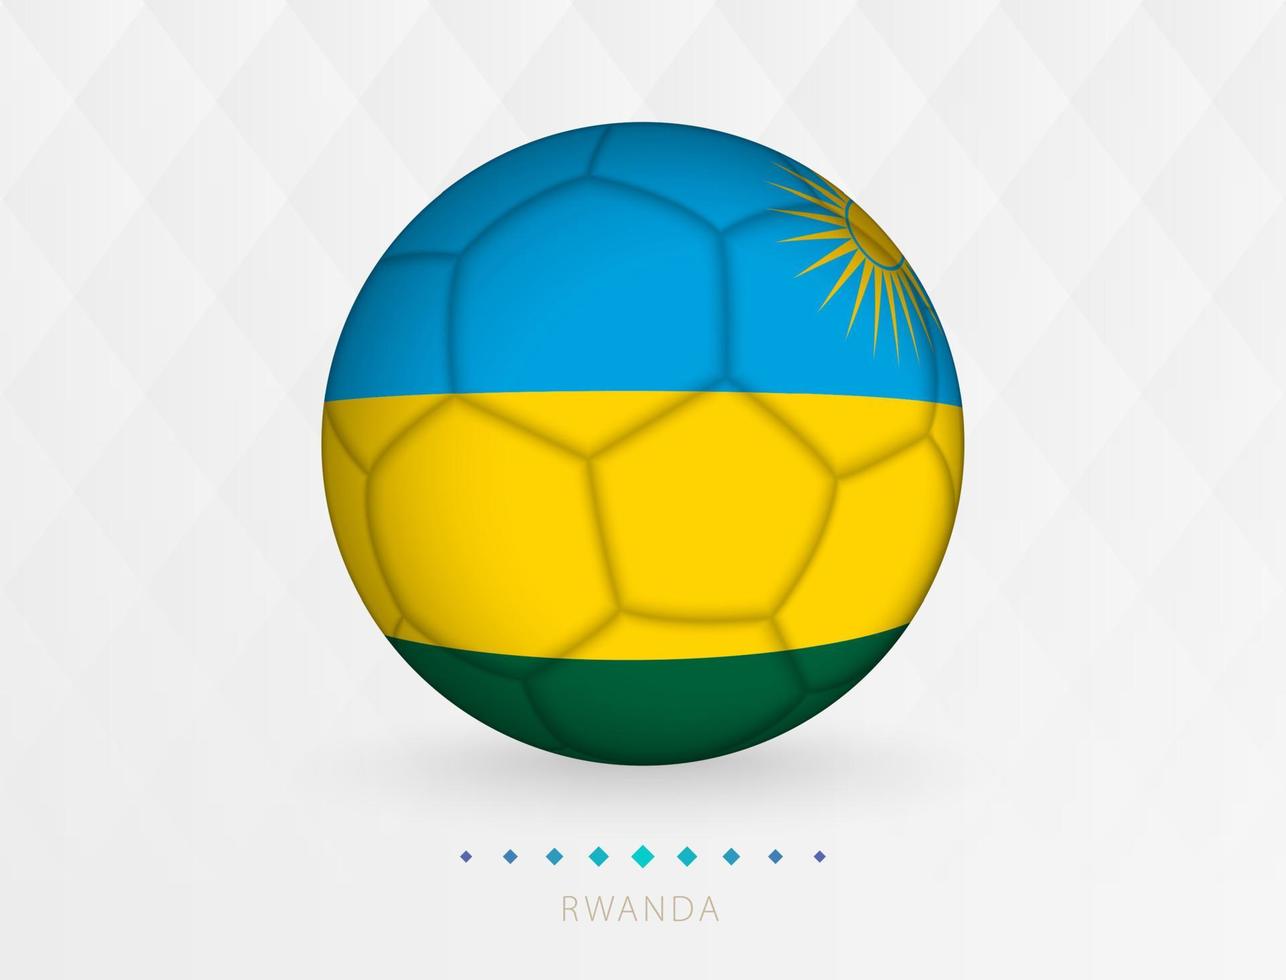 Football ball with Rwanda flag pattern, soccer ball with flag of Rwanda national team. vector